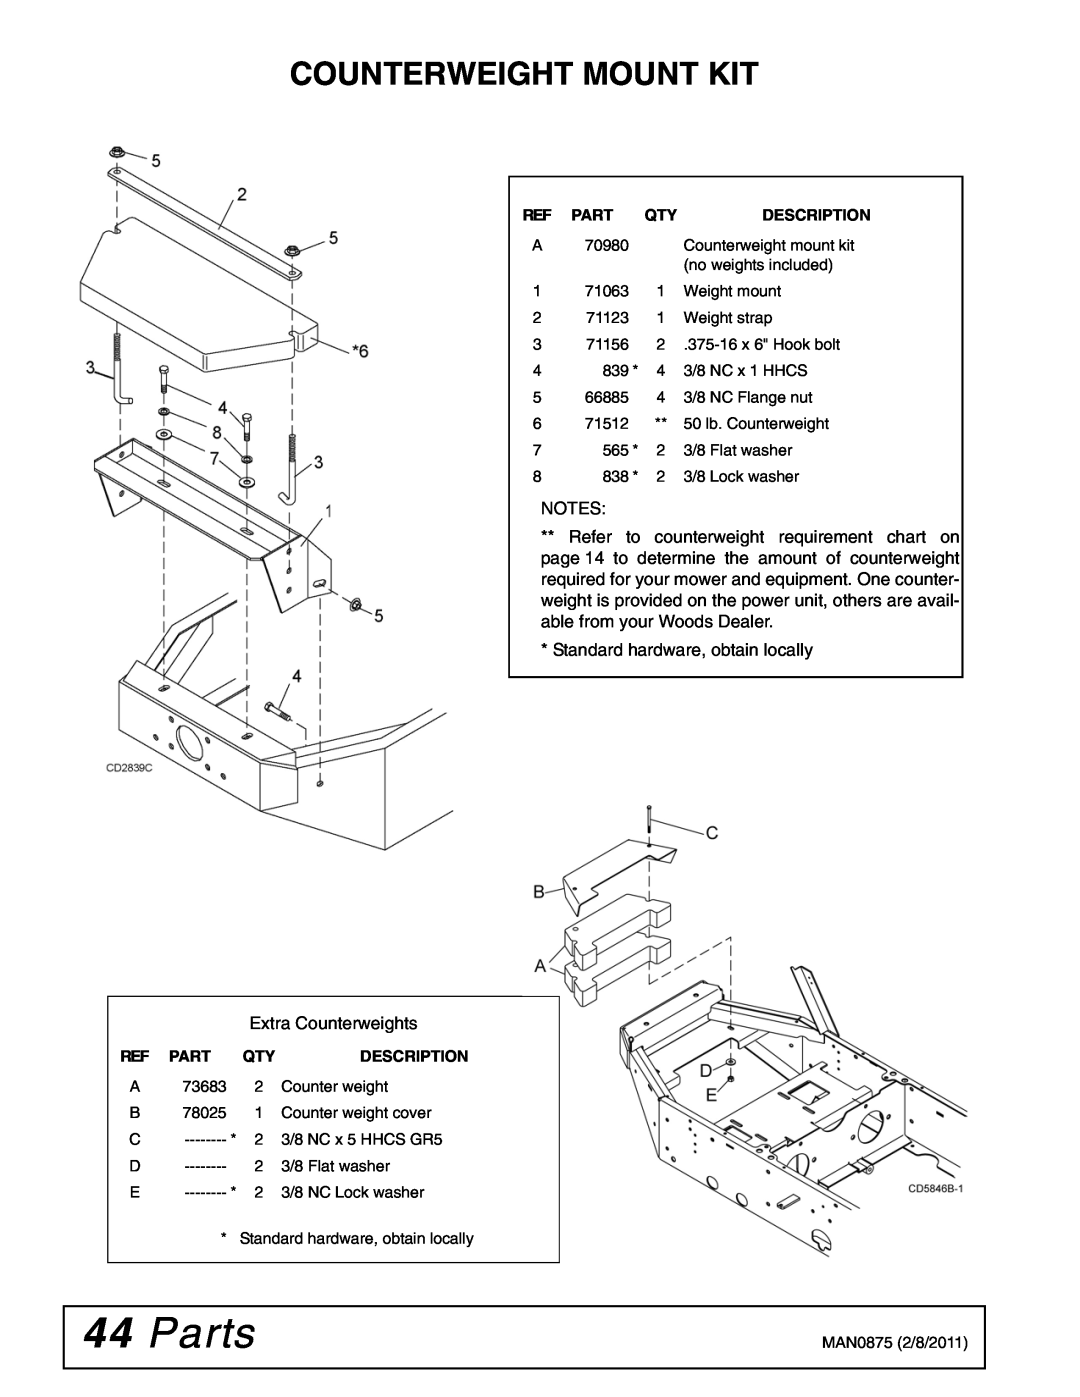 Woods Equipment FZ28K, FZ23B manual Parts, Counterweight Mount Kit 